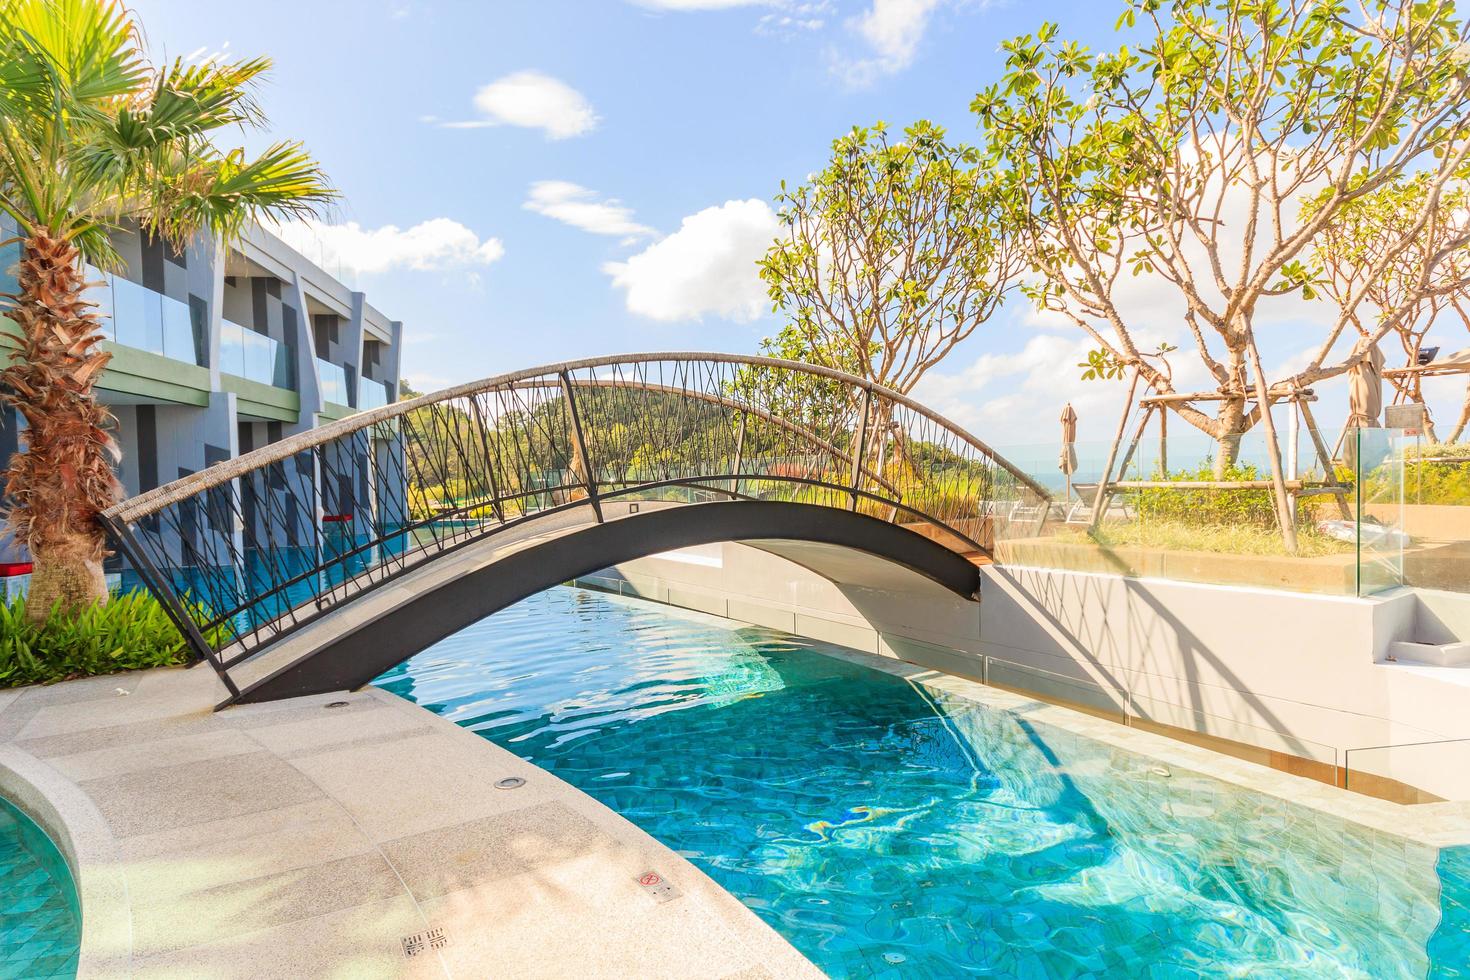 Piscina en Crest Resort y Pool Villas and Resorts, Phuket, Tailandia, 2017 foto